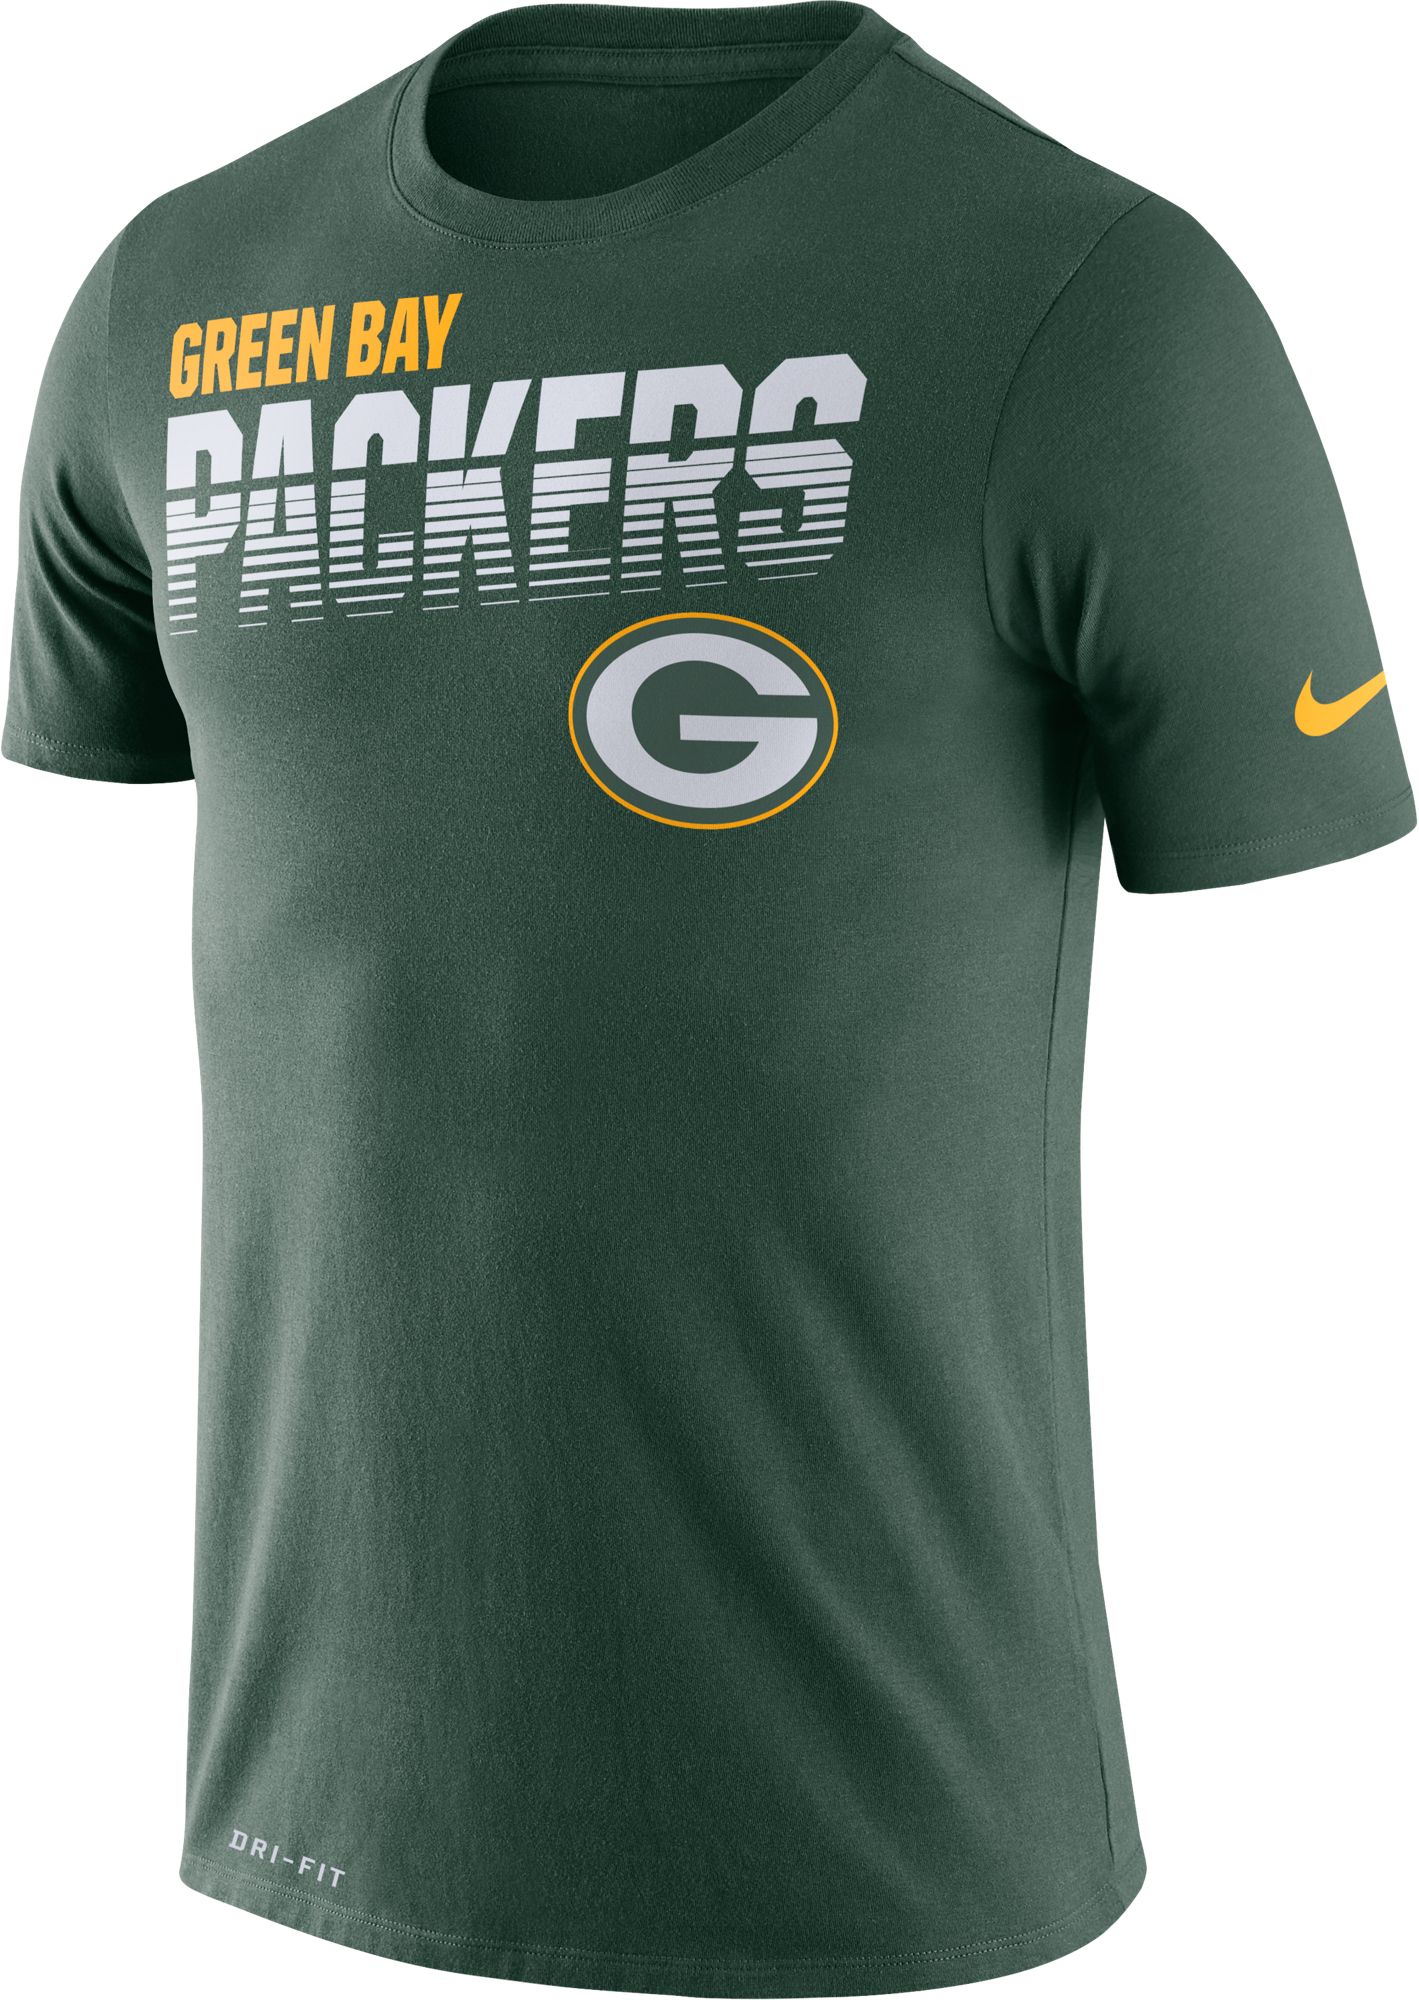 Nike Men's Green Bay Packers Sideline 